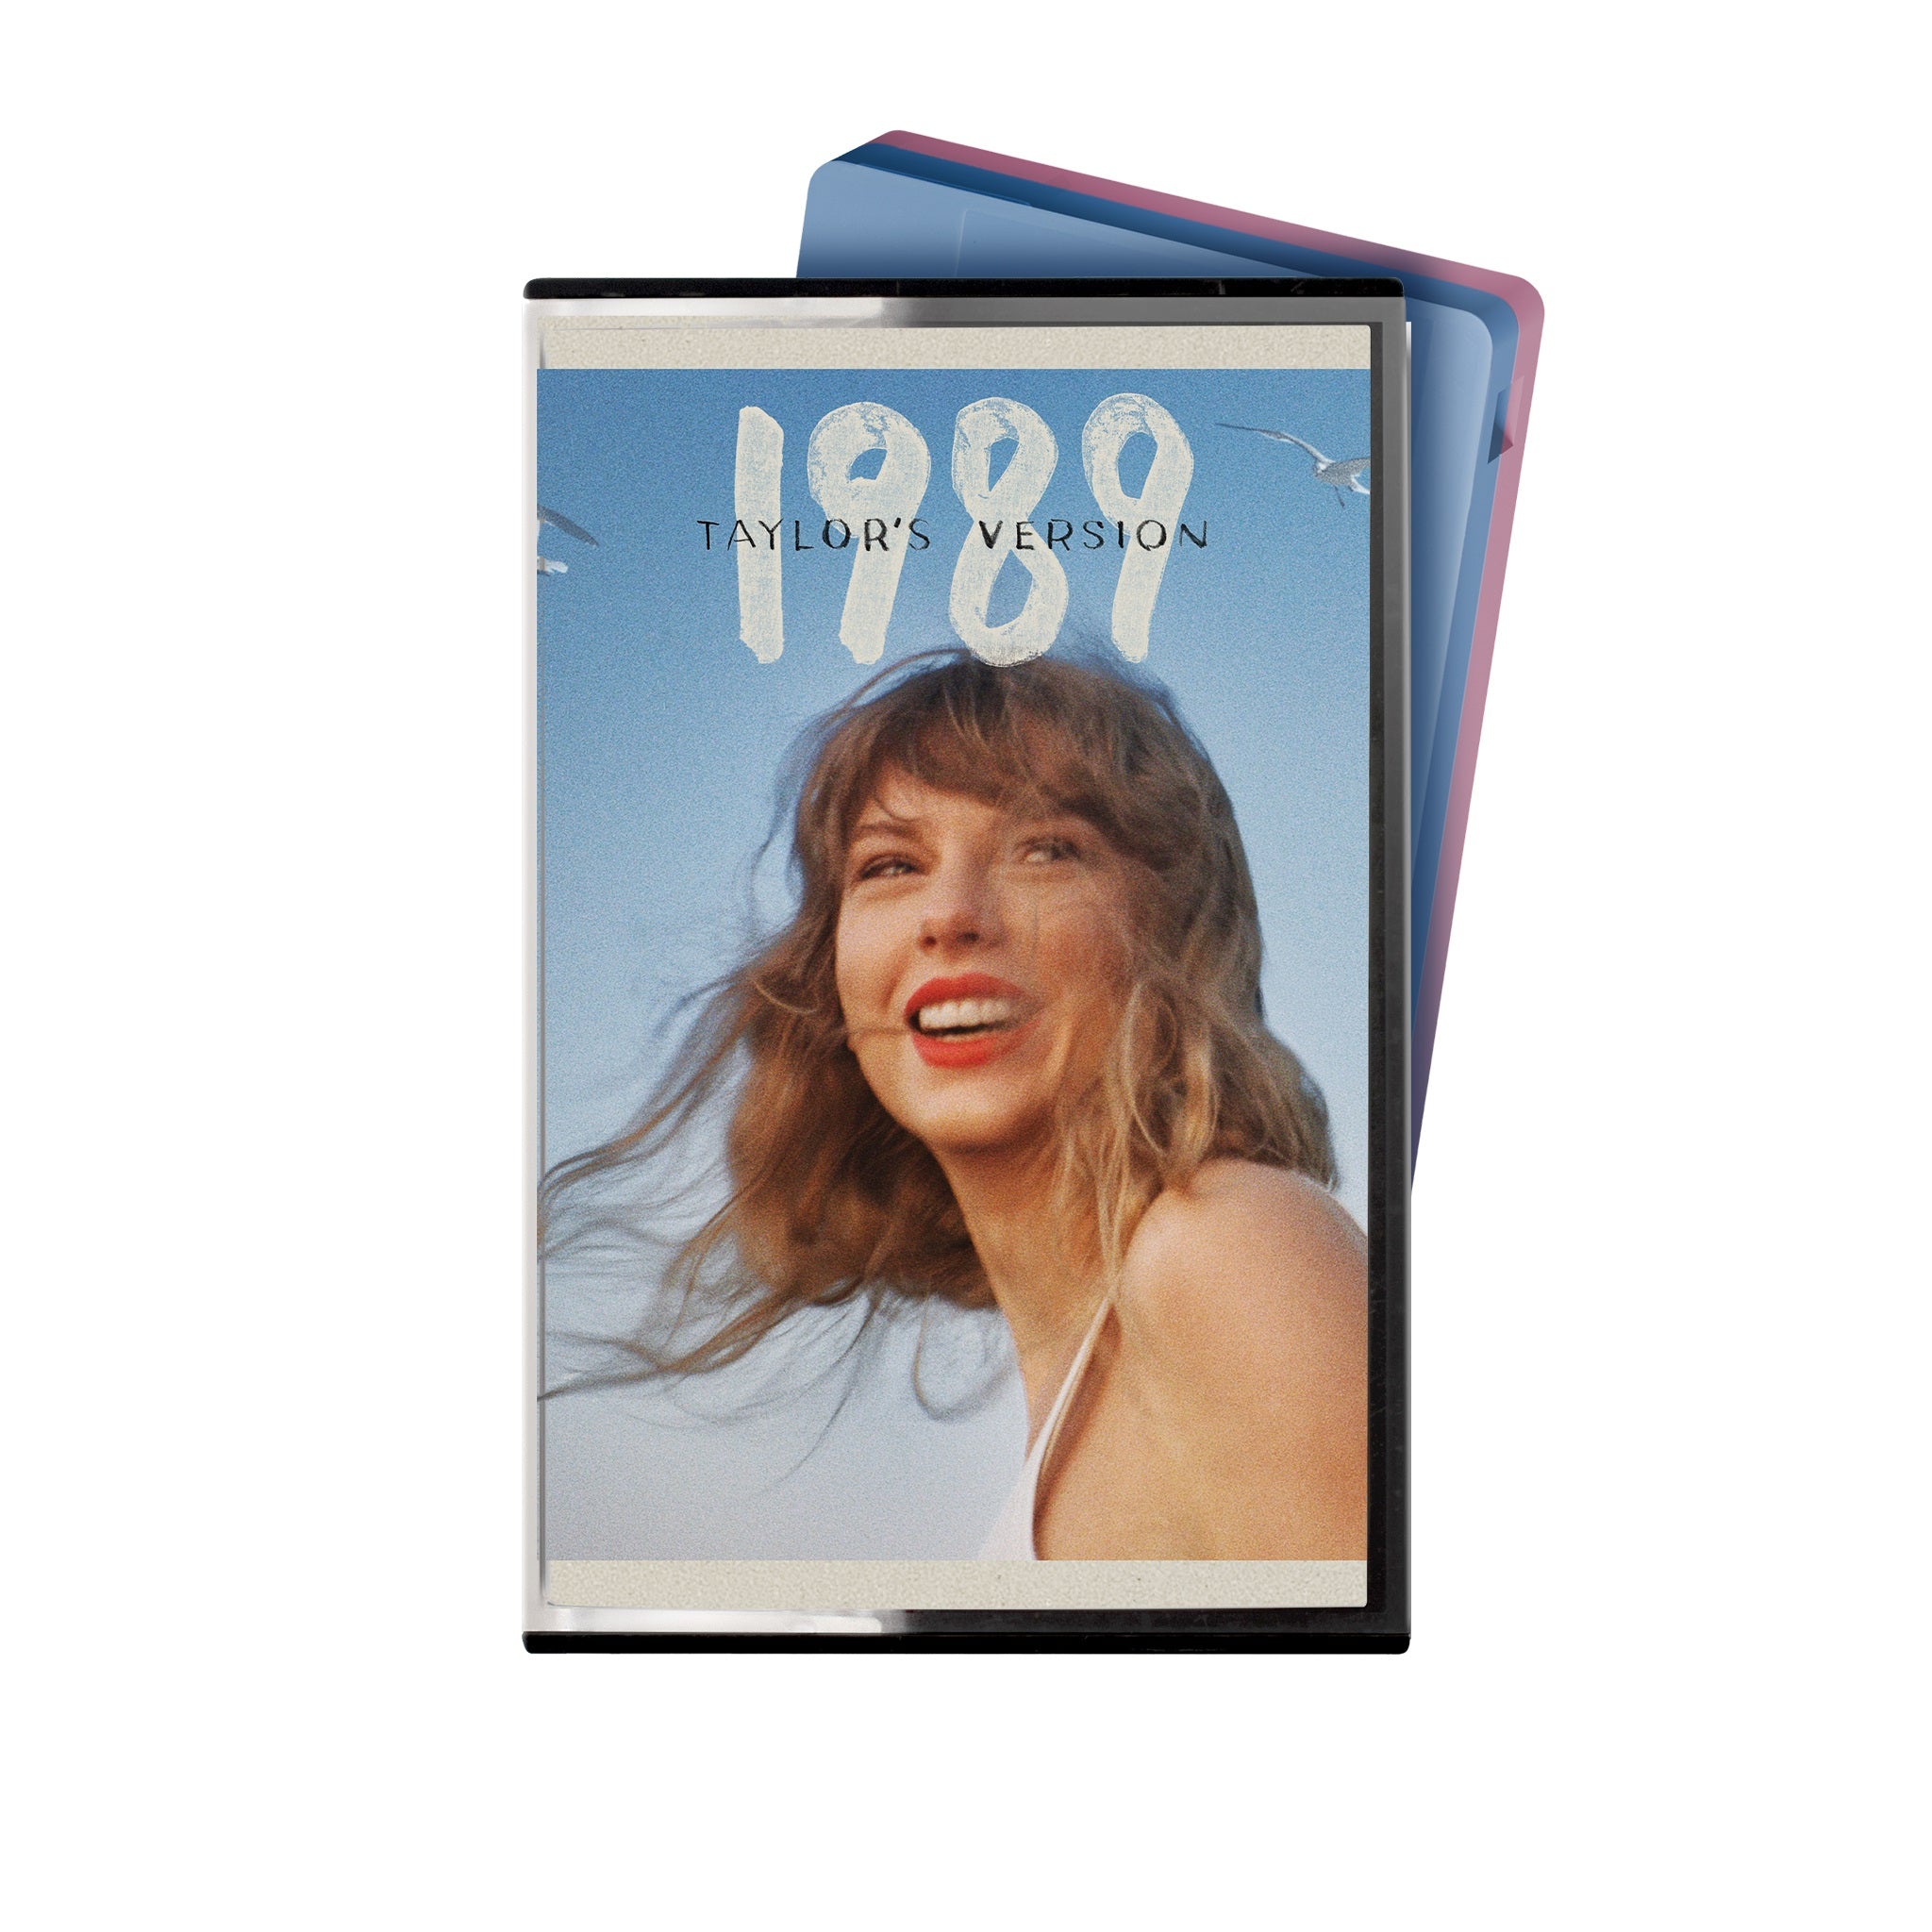 Taylor Swift- 1989 (Taylor's Version) (Pink/Blue Cassette)